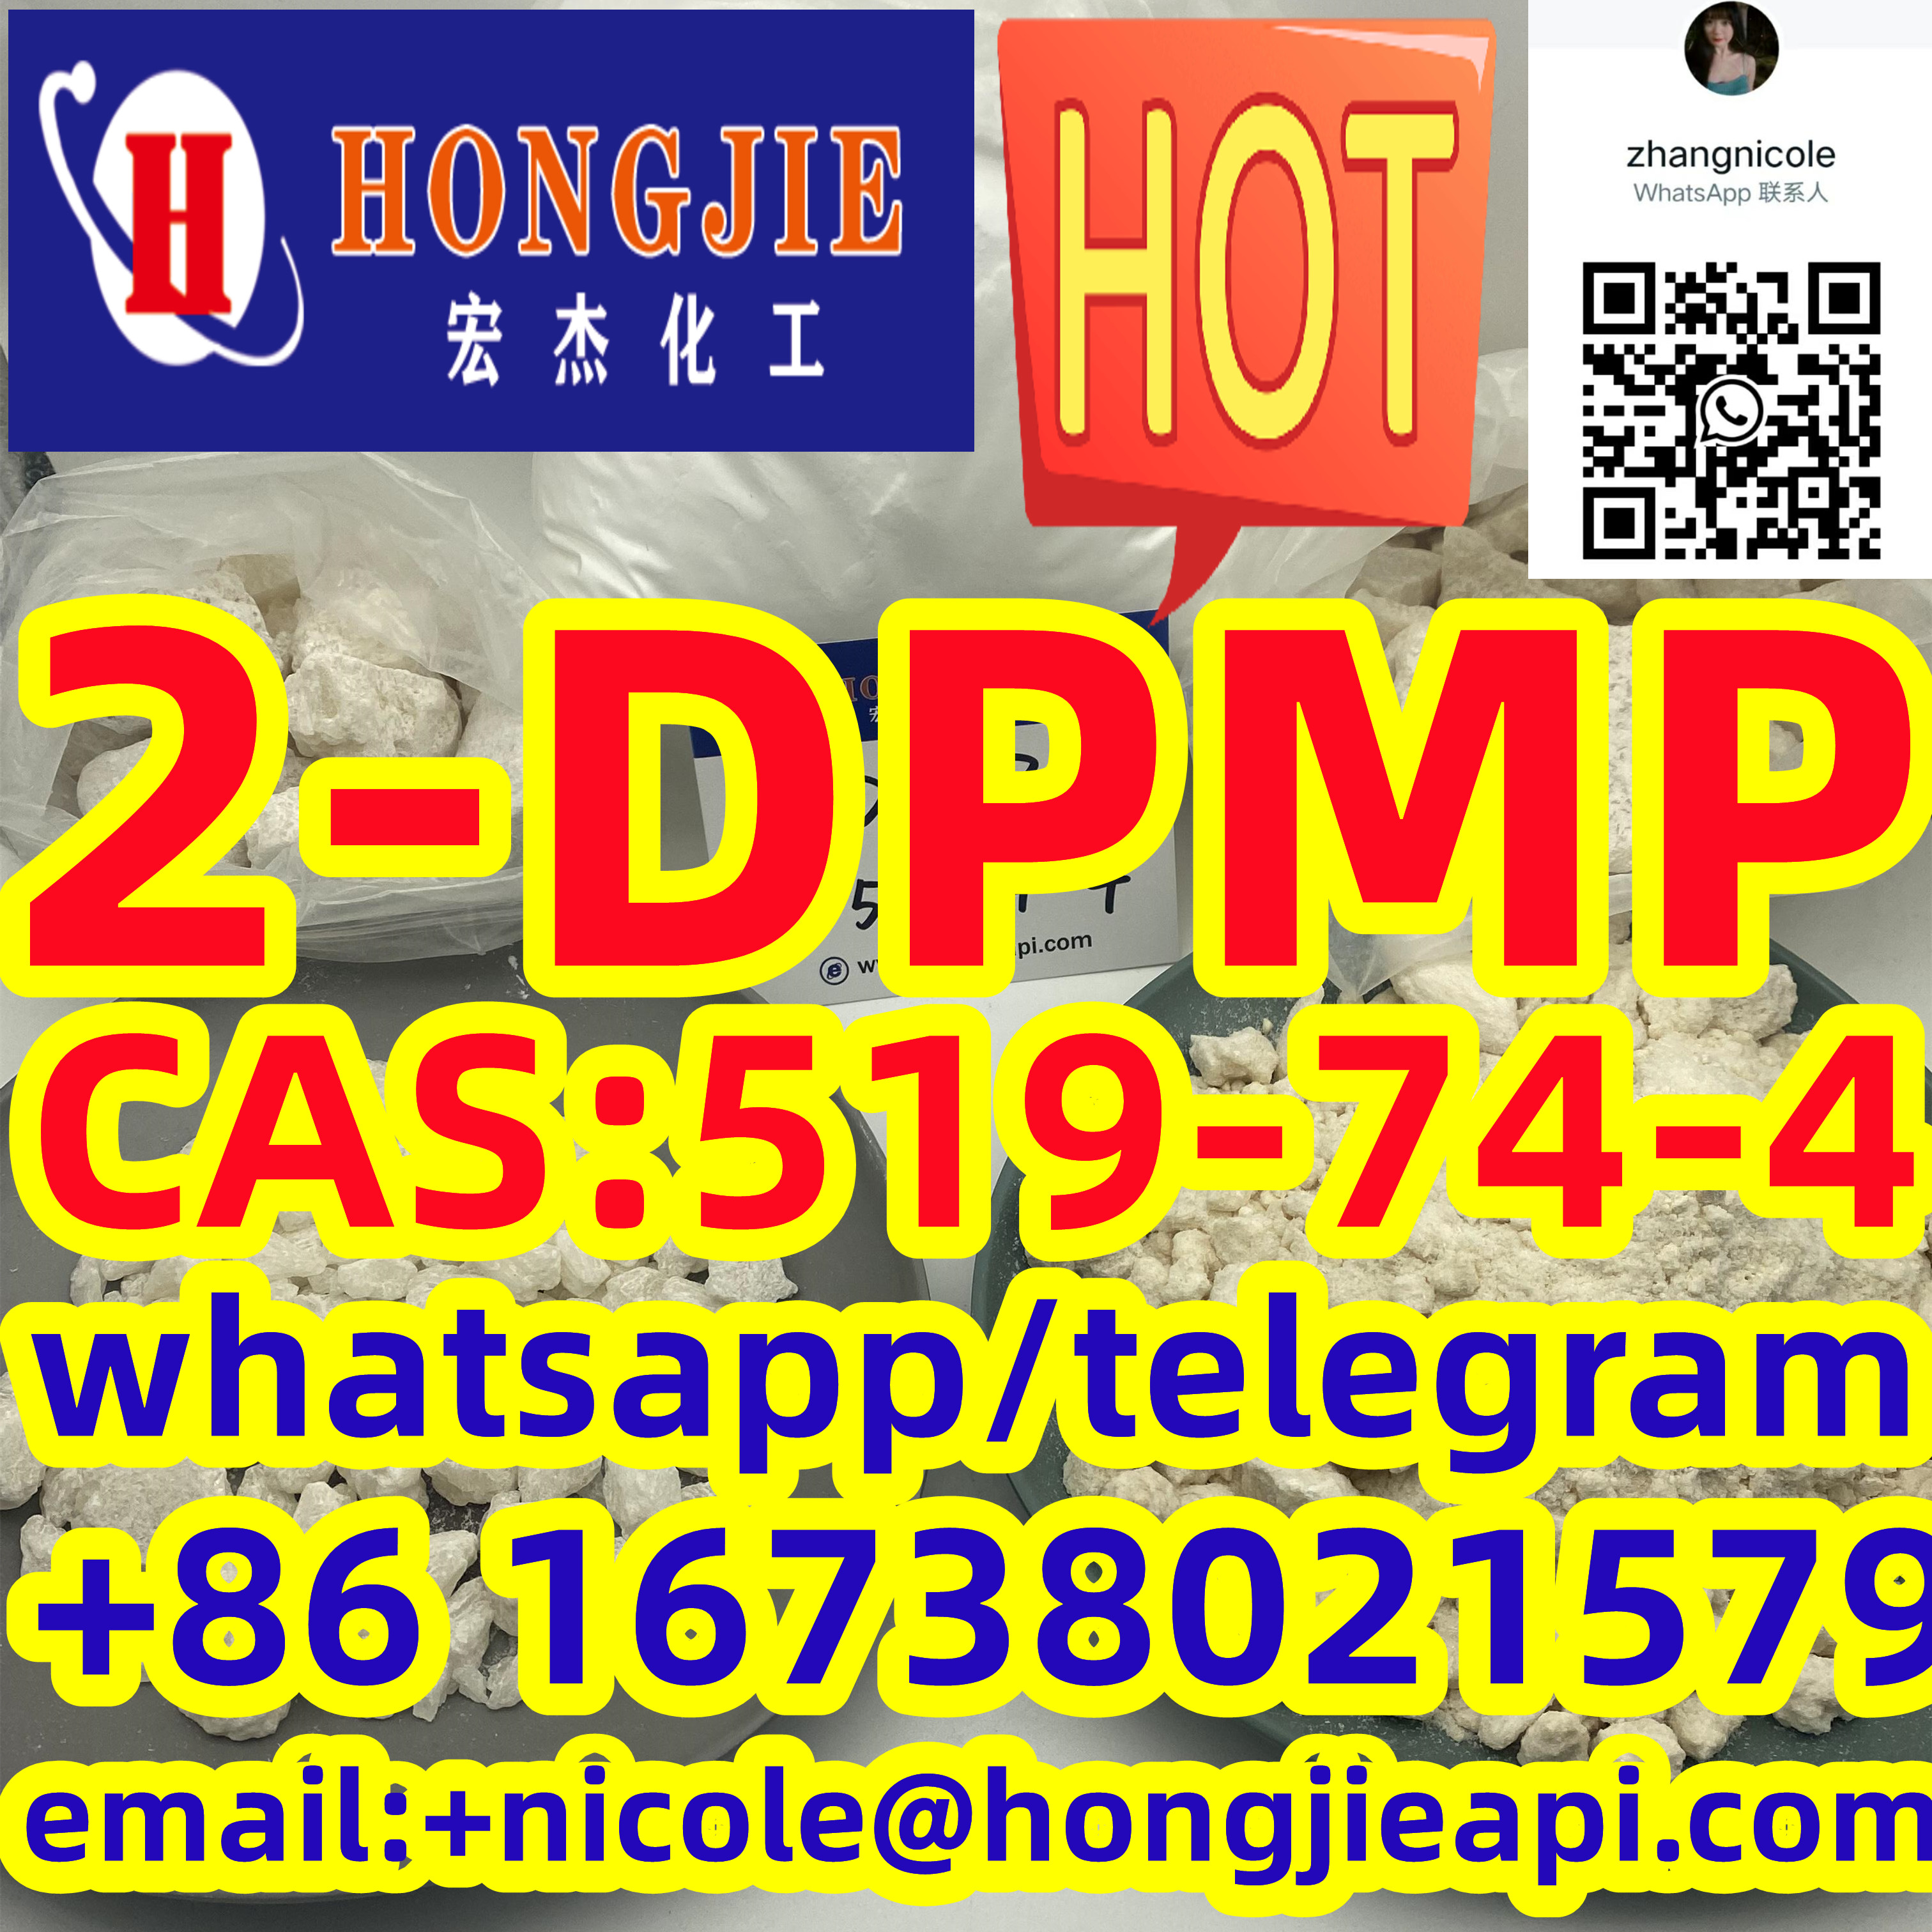 High quality 2-DPMP CAS:519-74-4